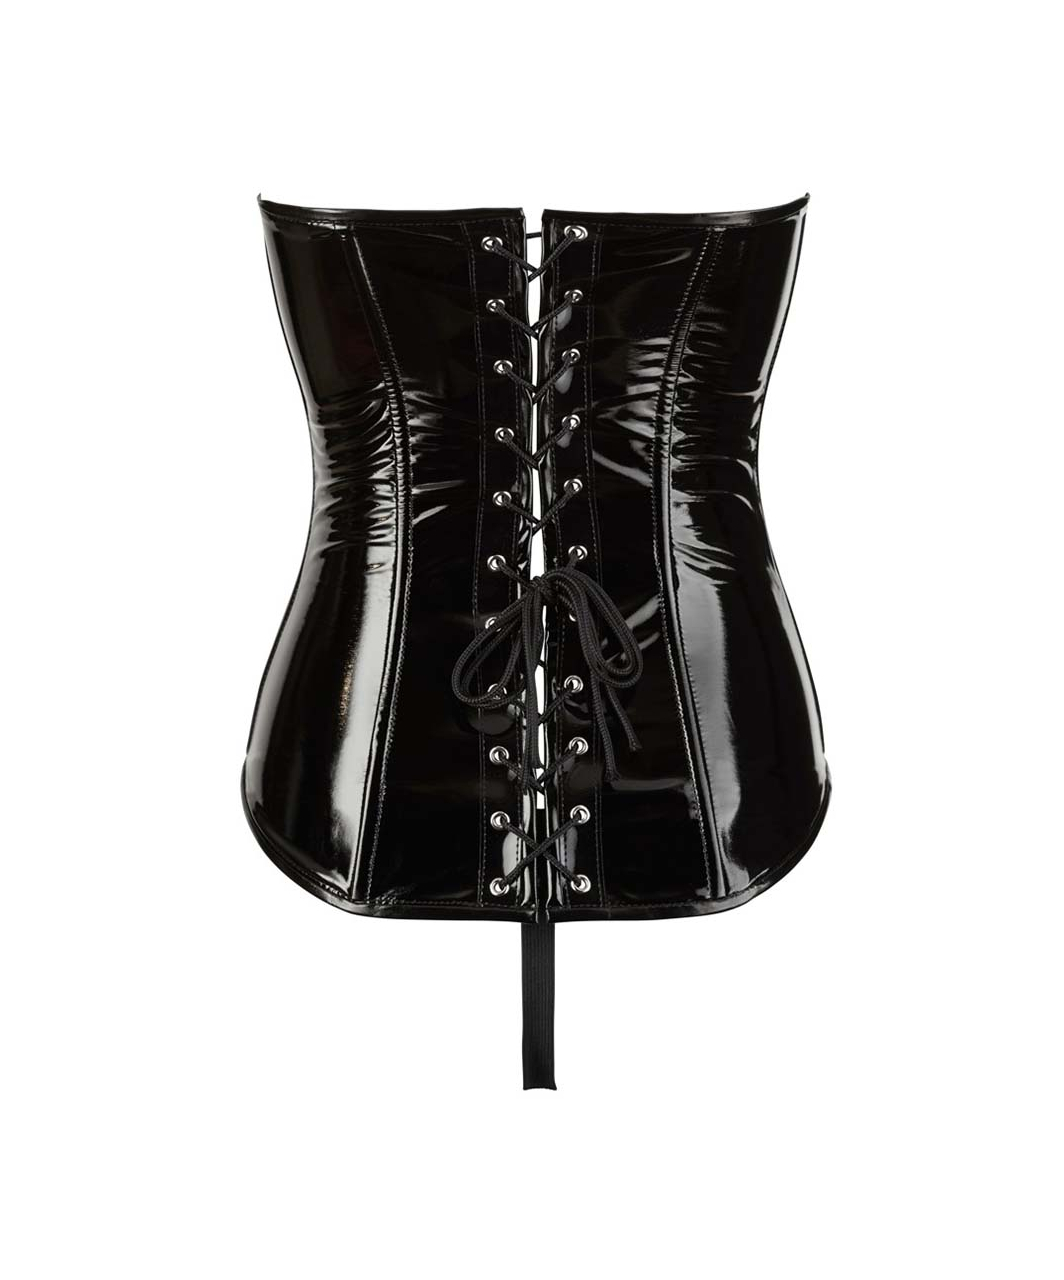 Black Level black vinyl corset with string